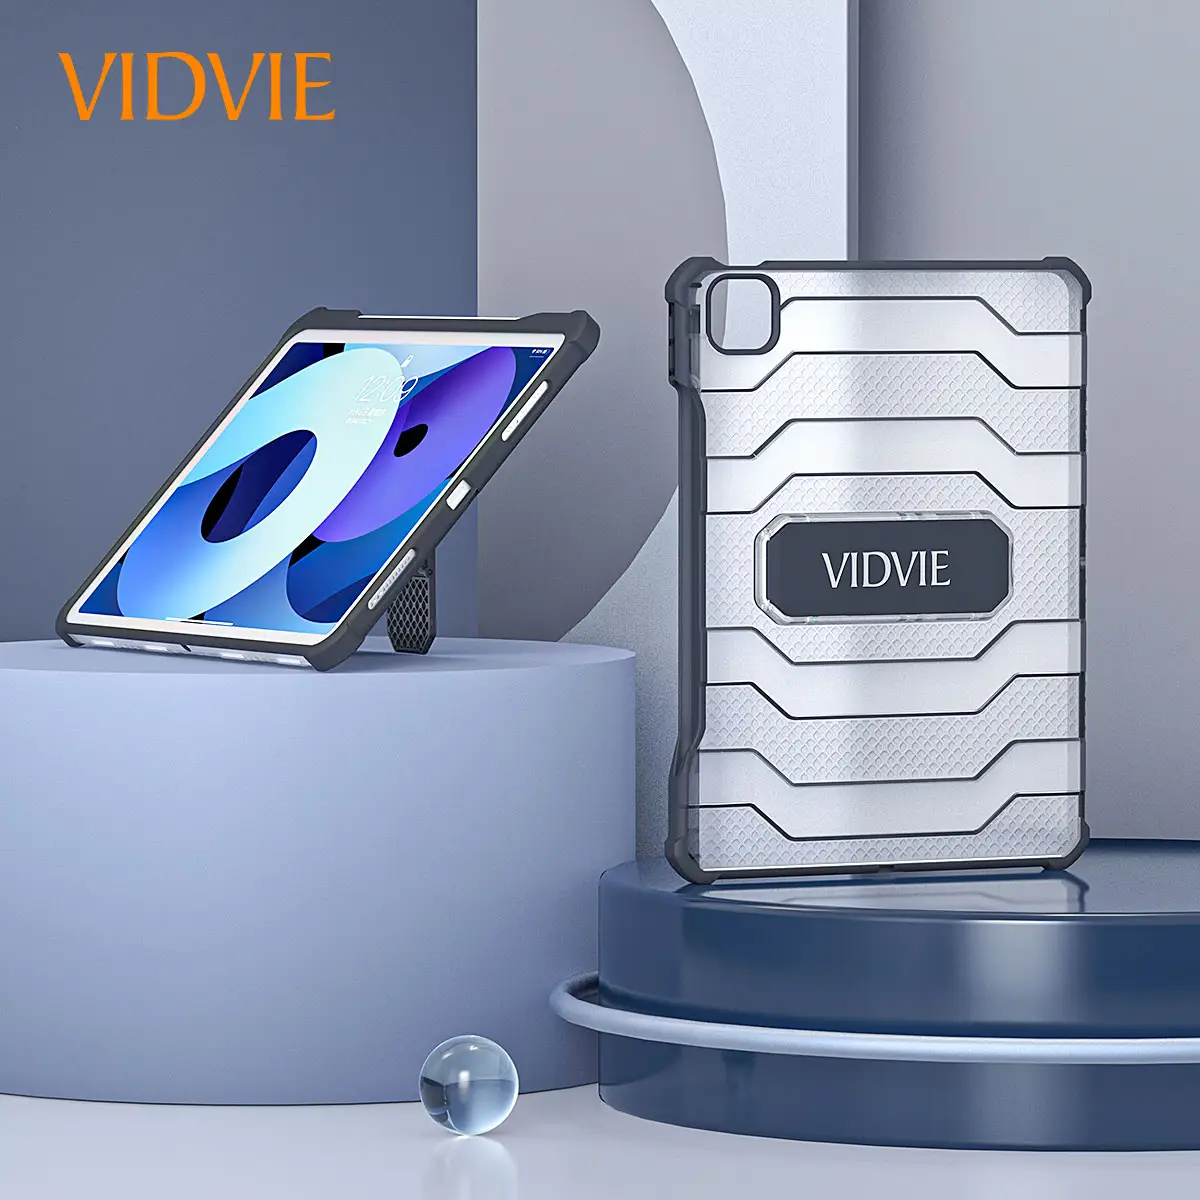 Vidvie Compact Tpu Pc Transparant Schokbestendig Pad Case Cover Met Potlood Slot Voor Ipad Air Pro Mini